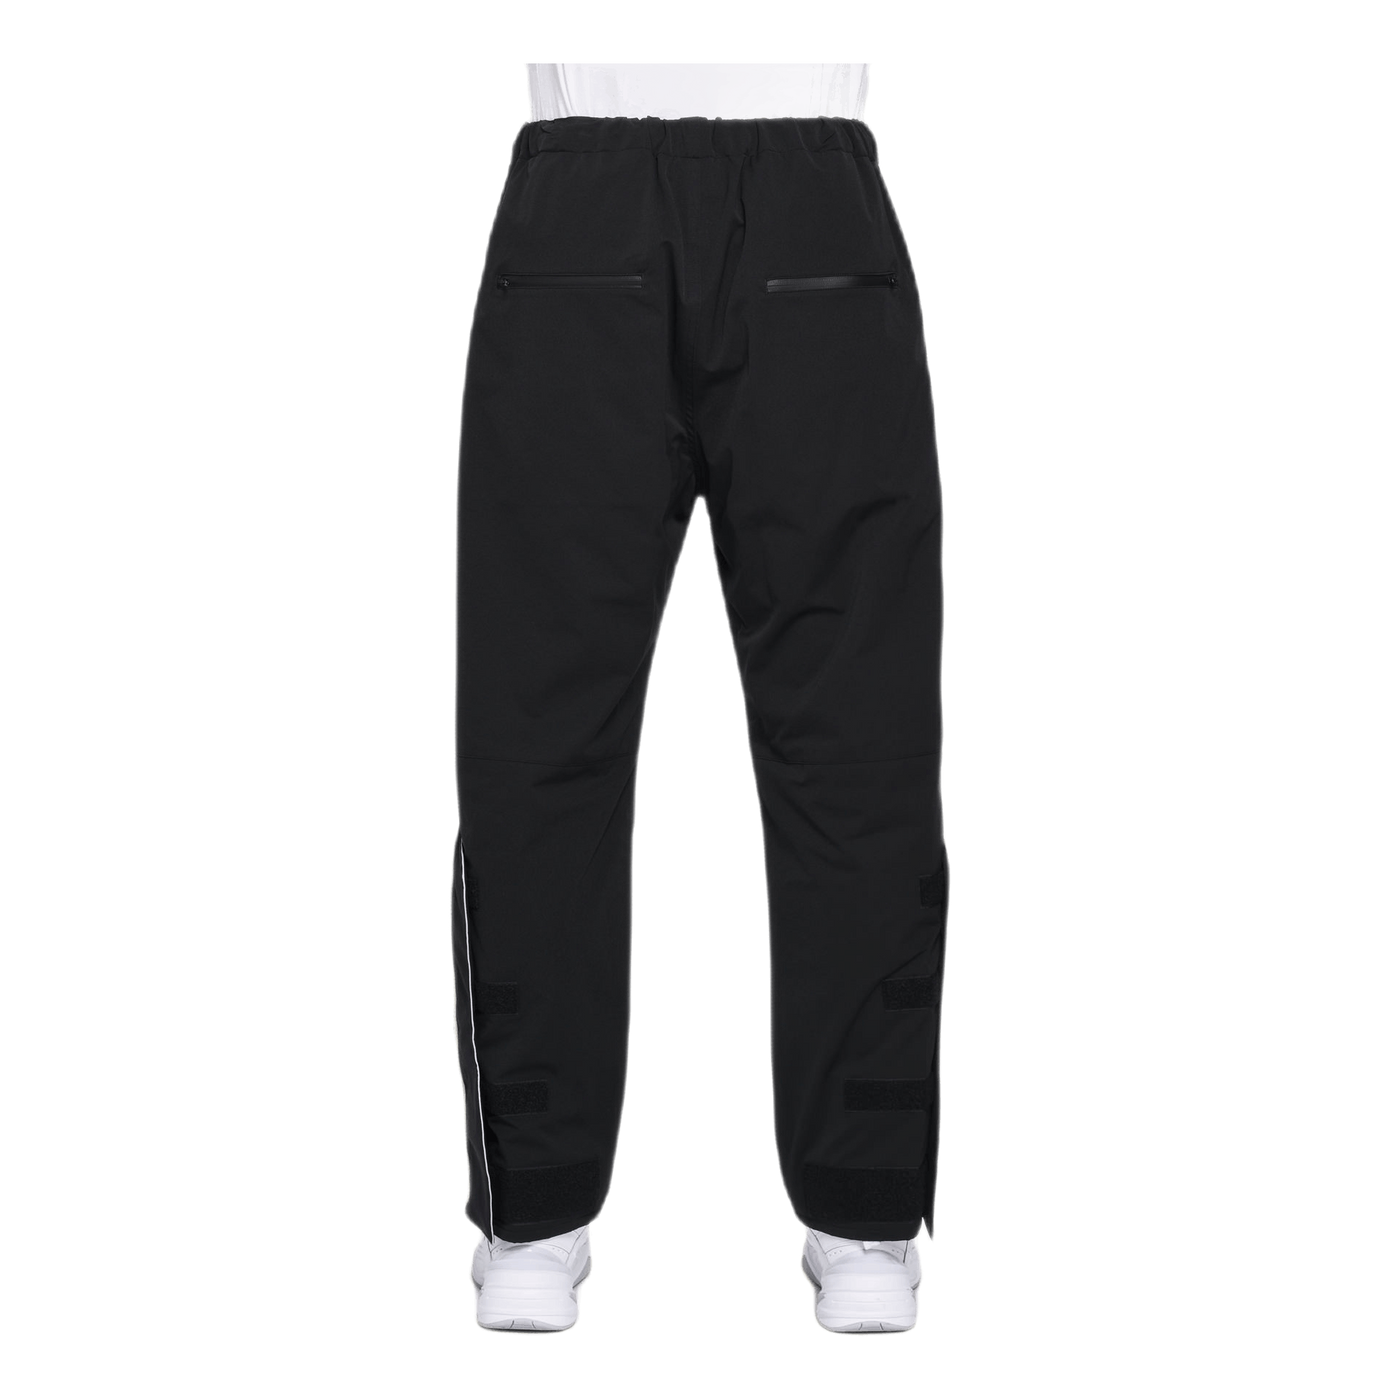 Warm-up Pants Black